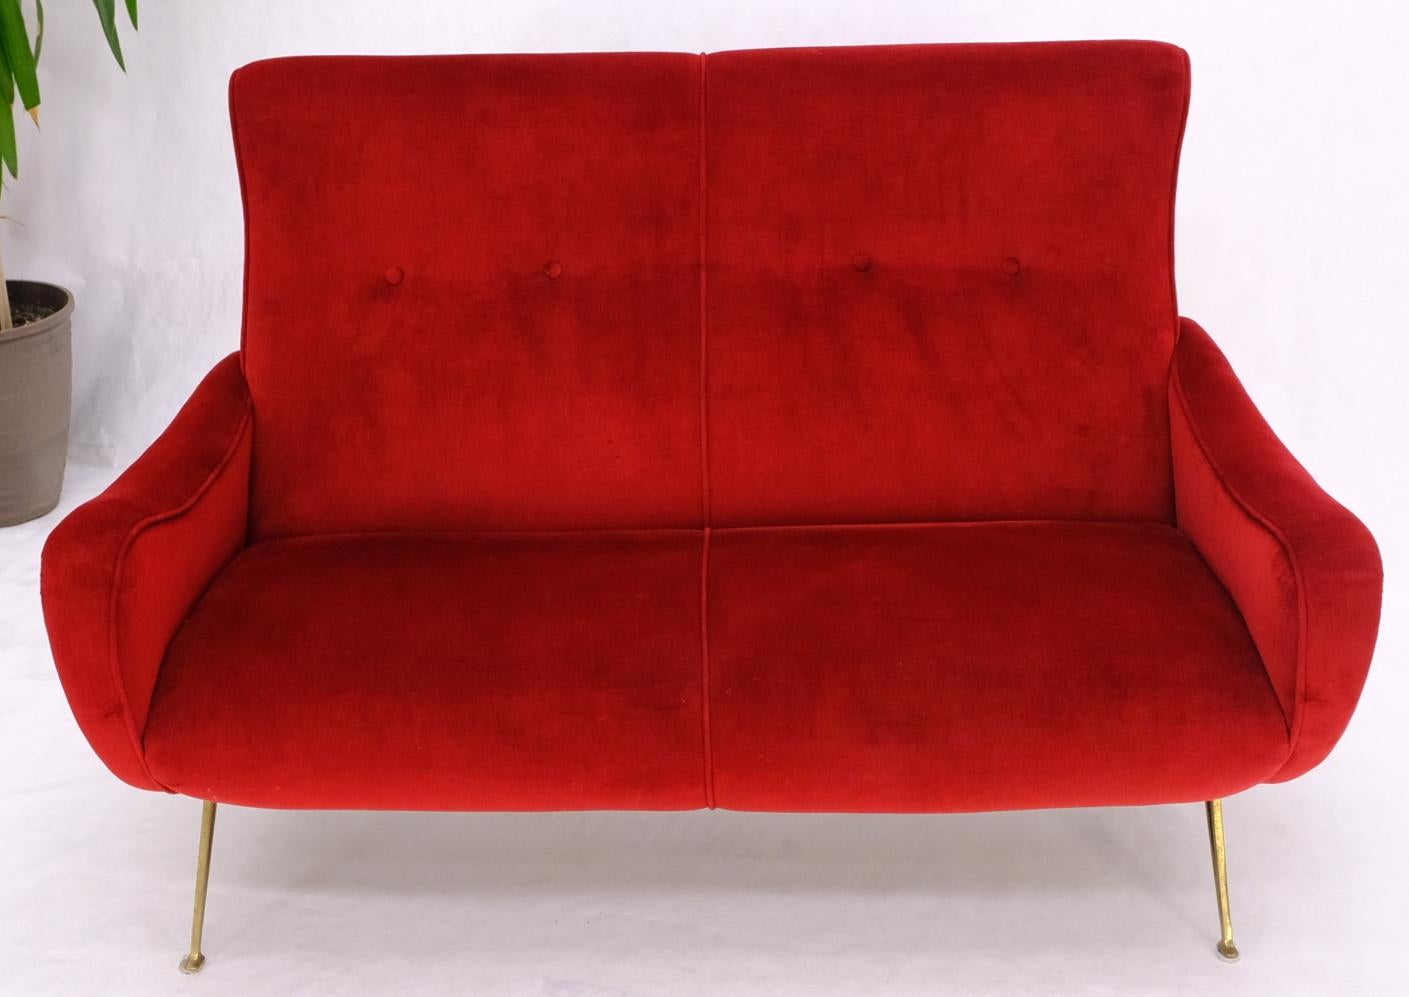 20th Century Red Upholstery Brass Legs Mid century Italian Modern Sofa Loveseat For Sale